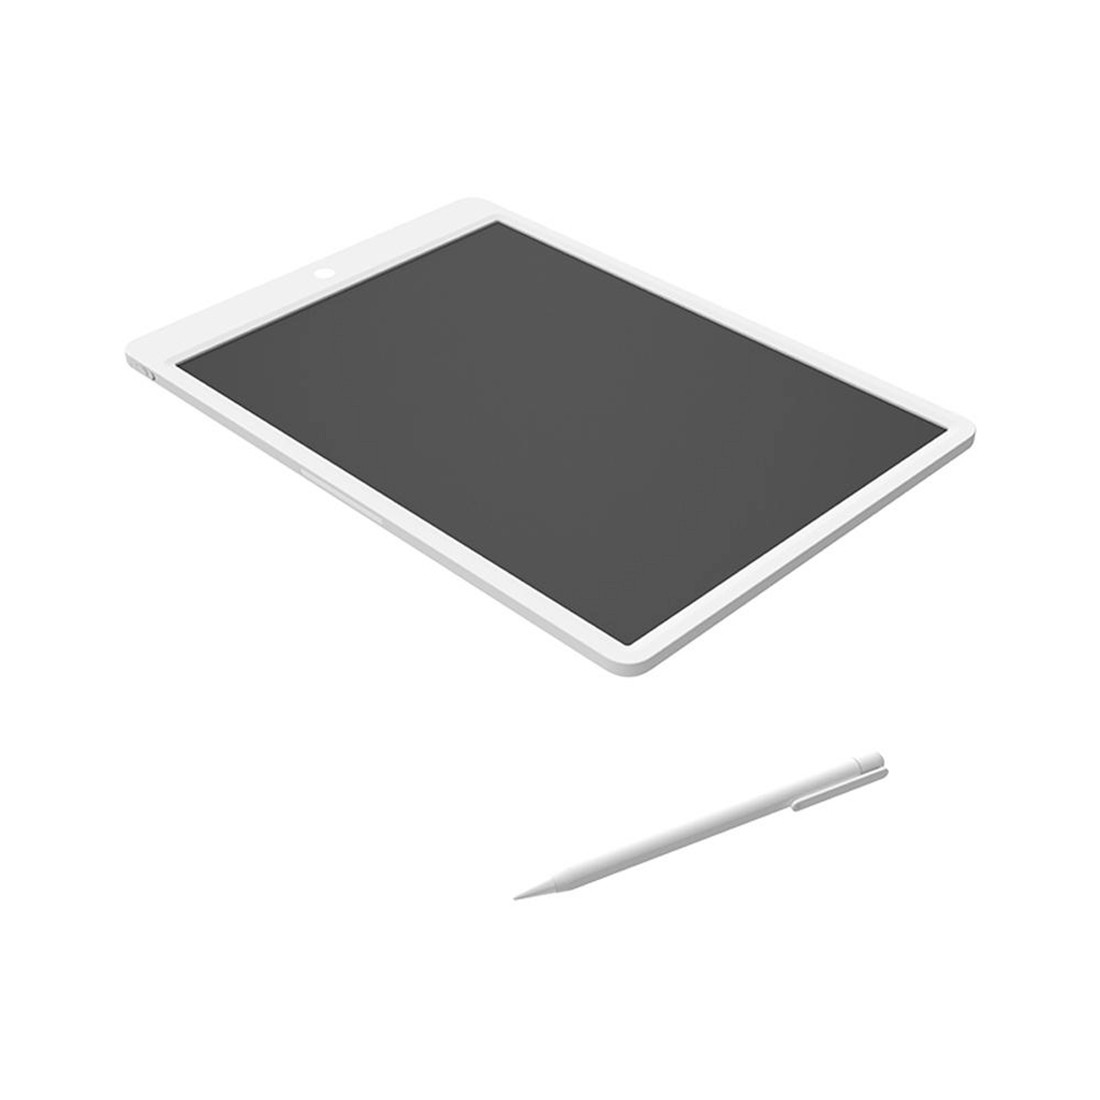 Цифровая доска, Xiaomi, Mijia LCD Blackboard XMXHB02WC,13,5 inches